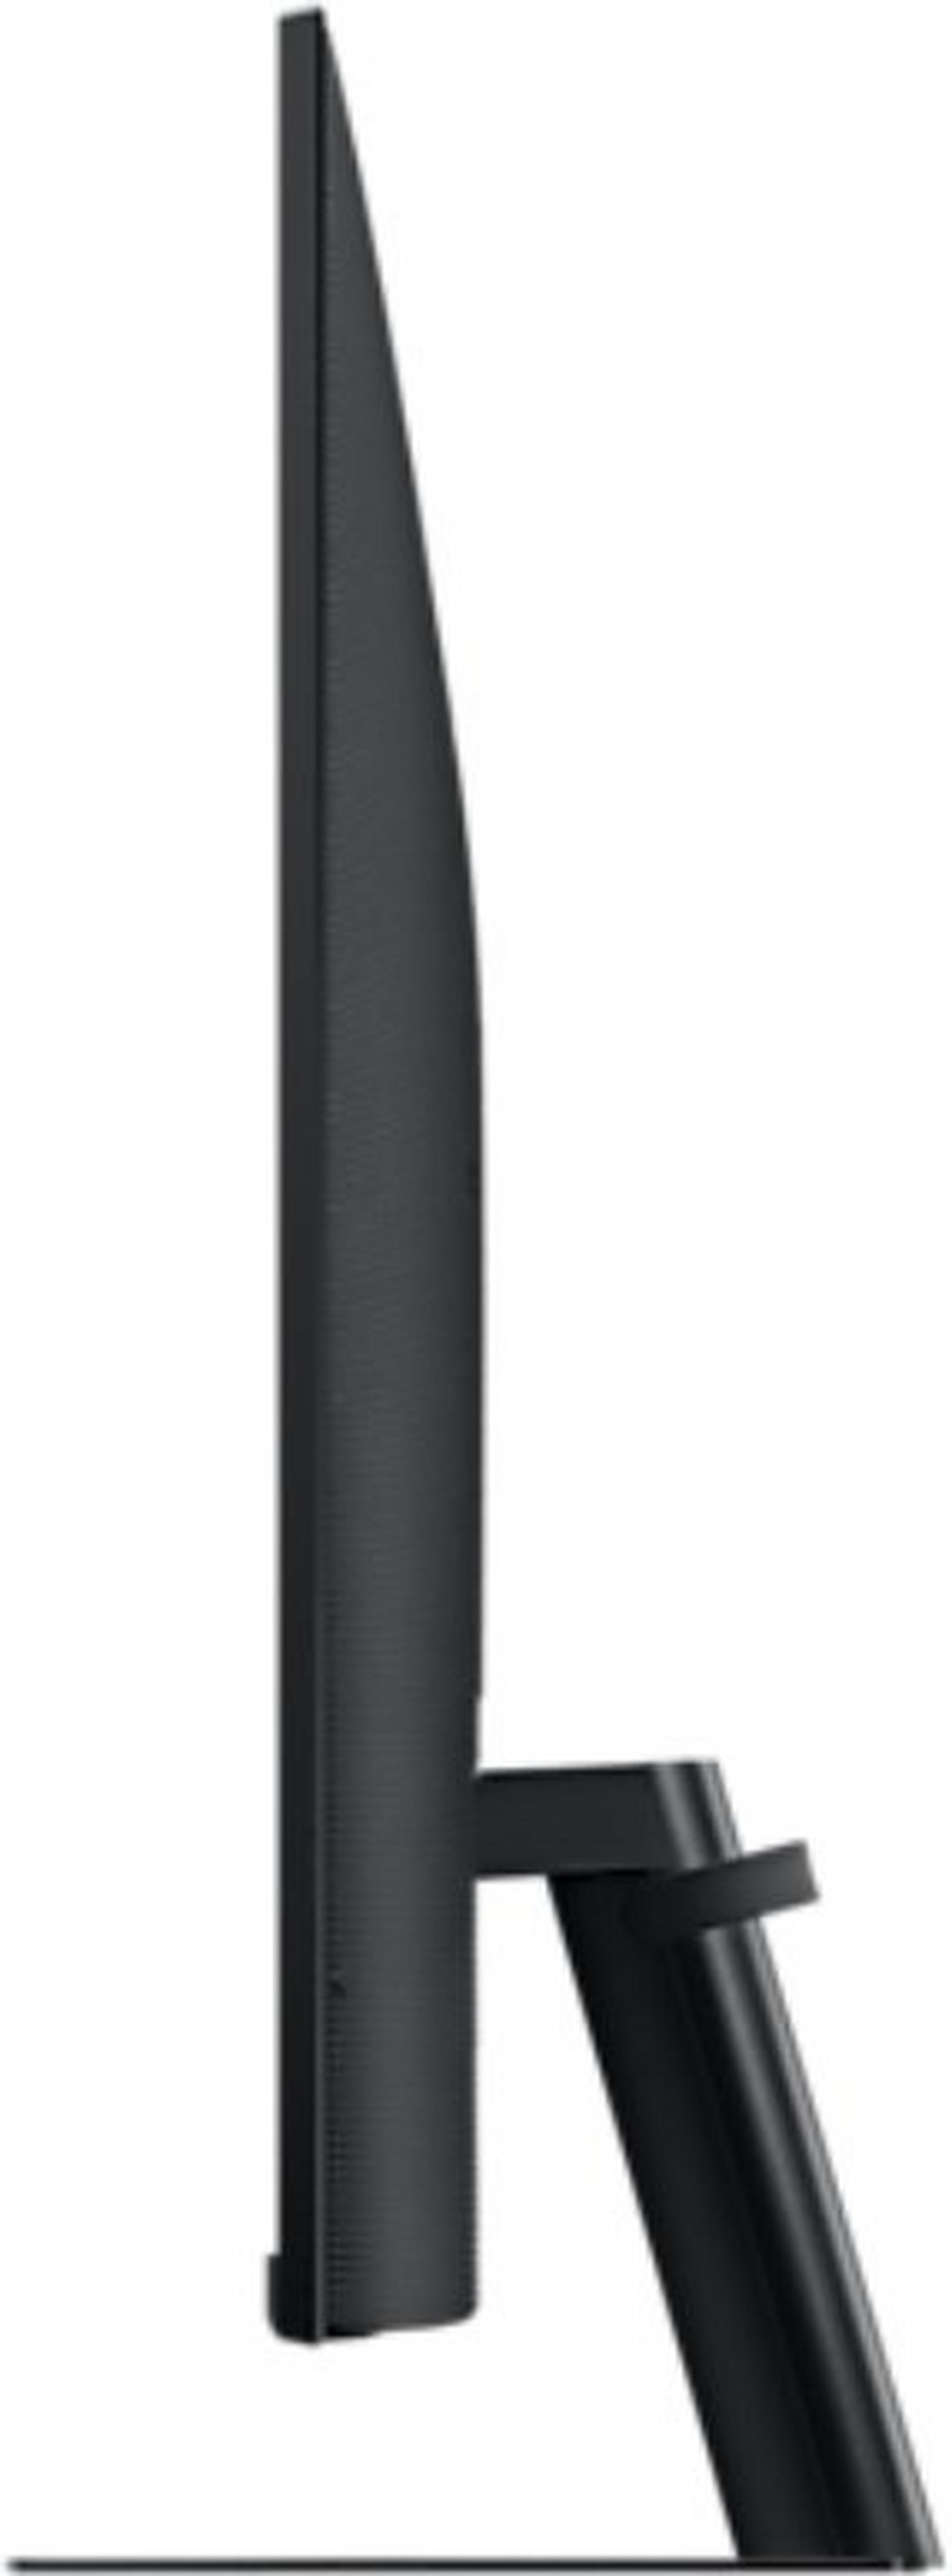 Samsung 32-inch UHD Smart Monitor - Black